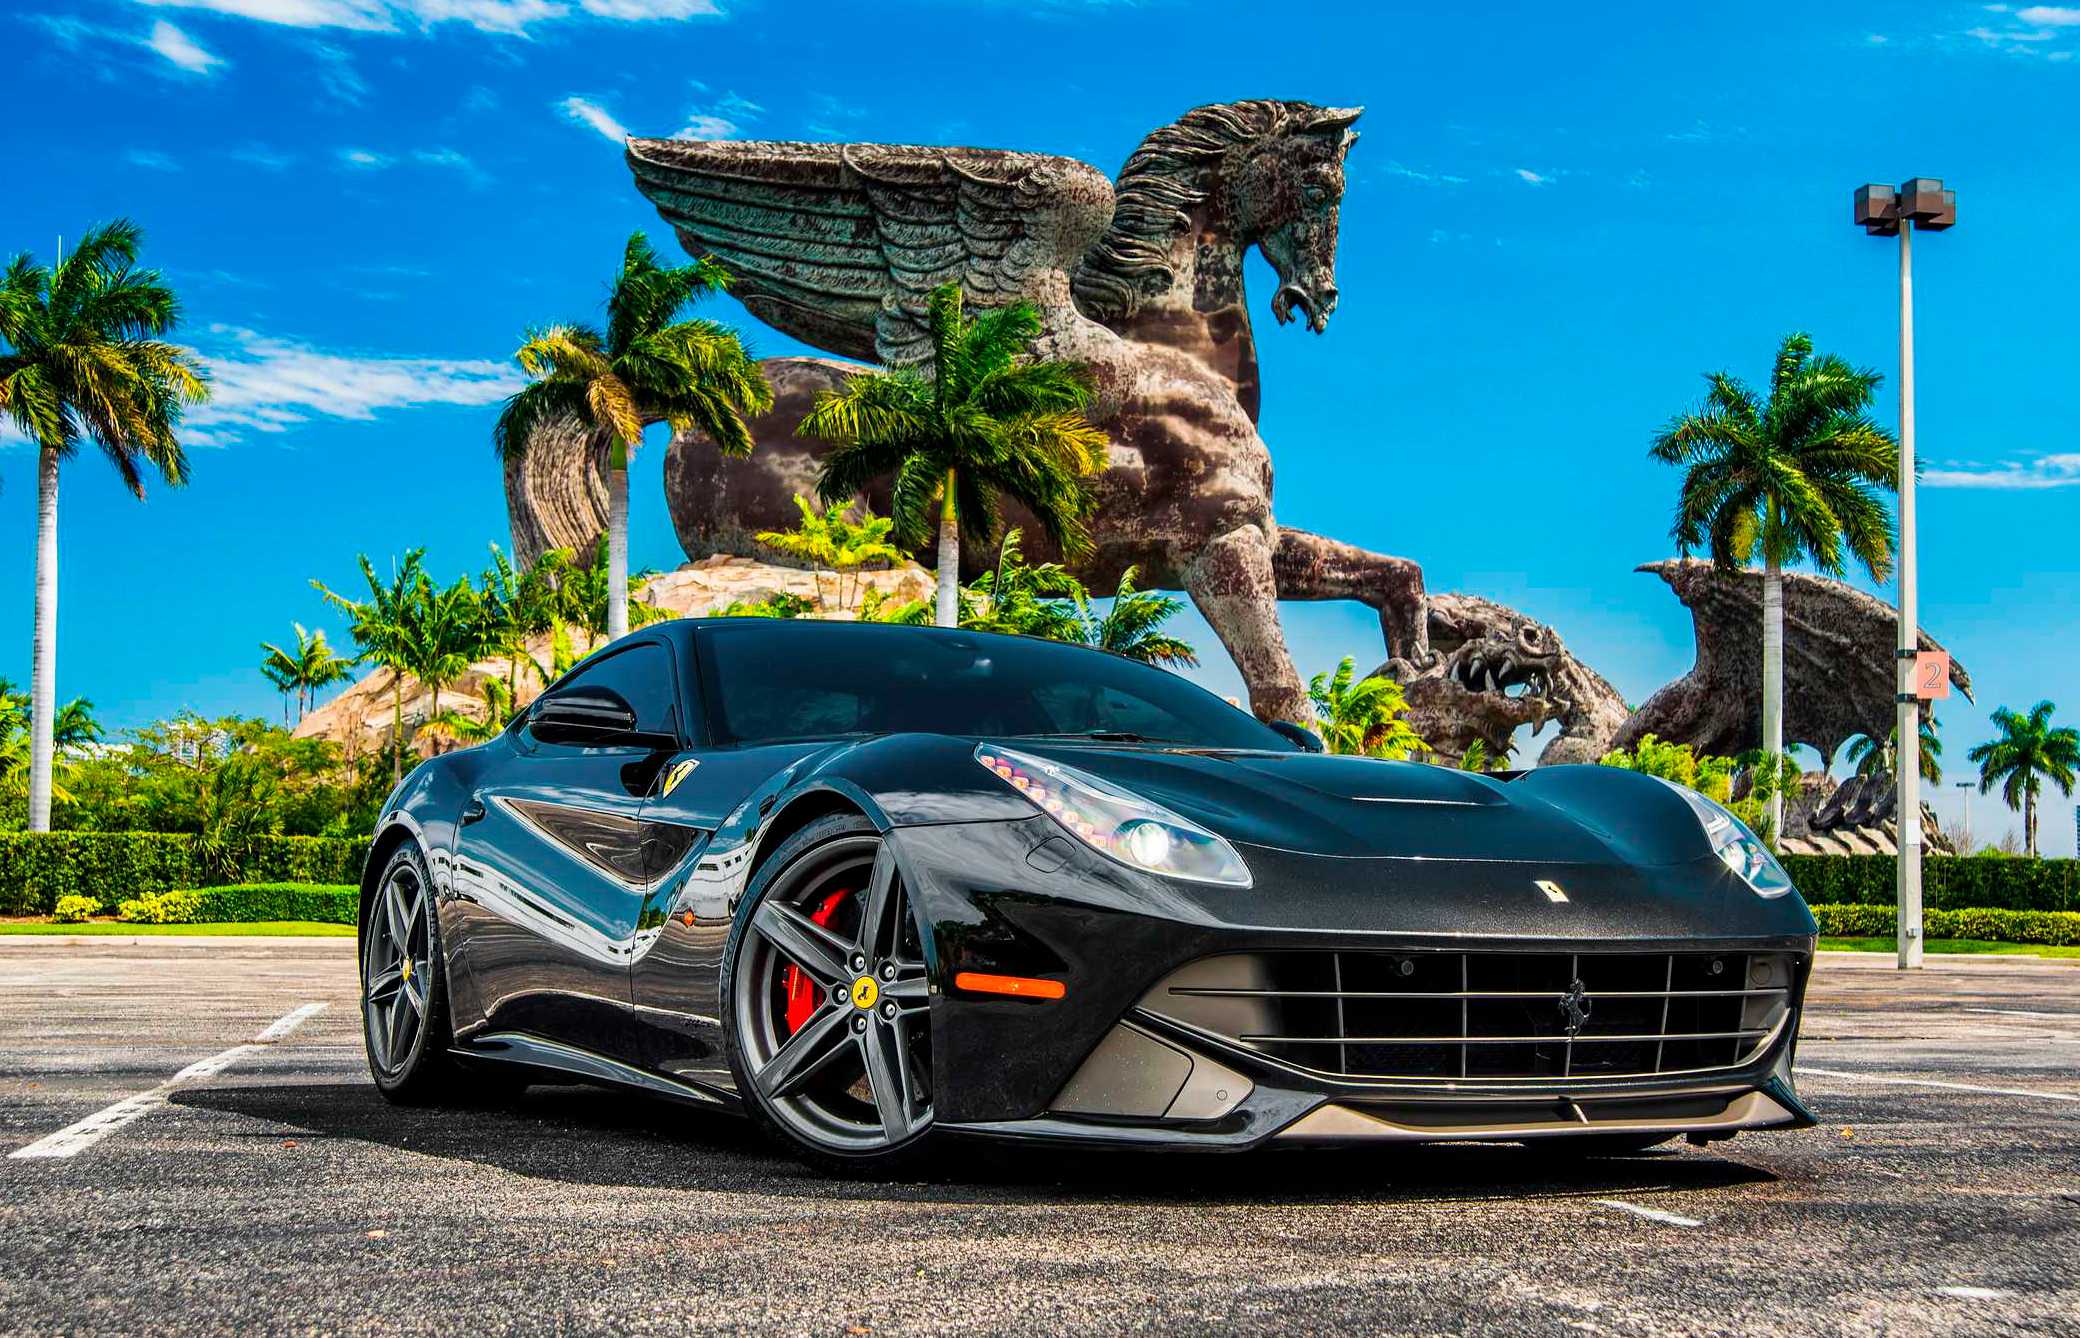 Luxury Car Rental Miami - Prestigious, Fast, & Exotic.